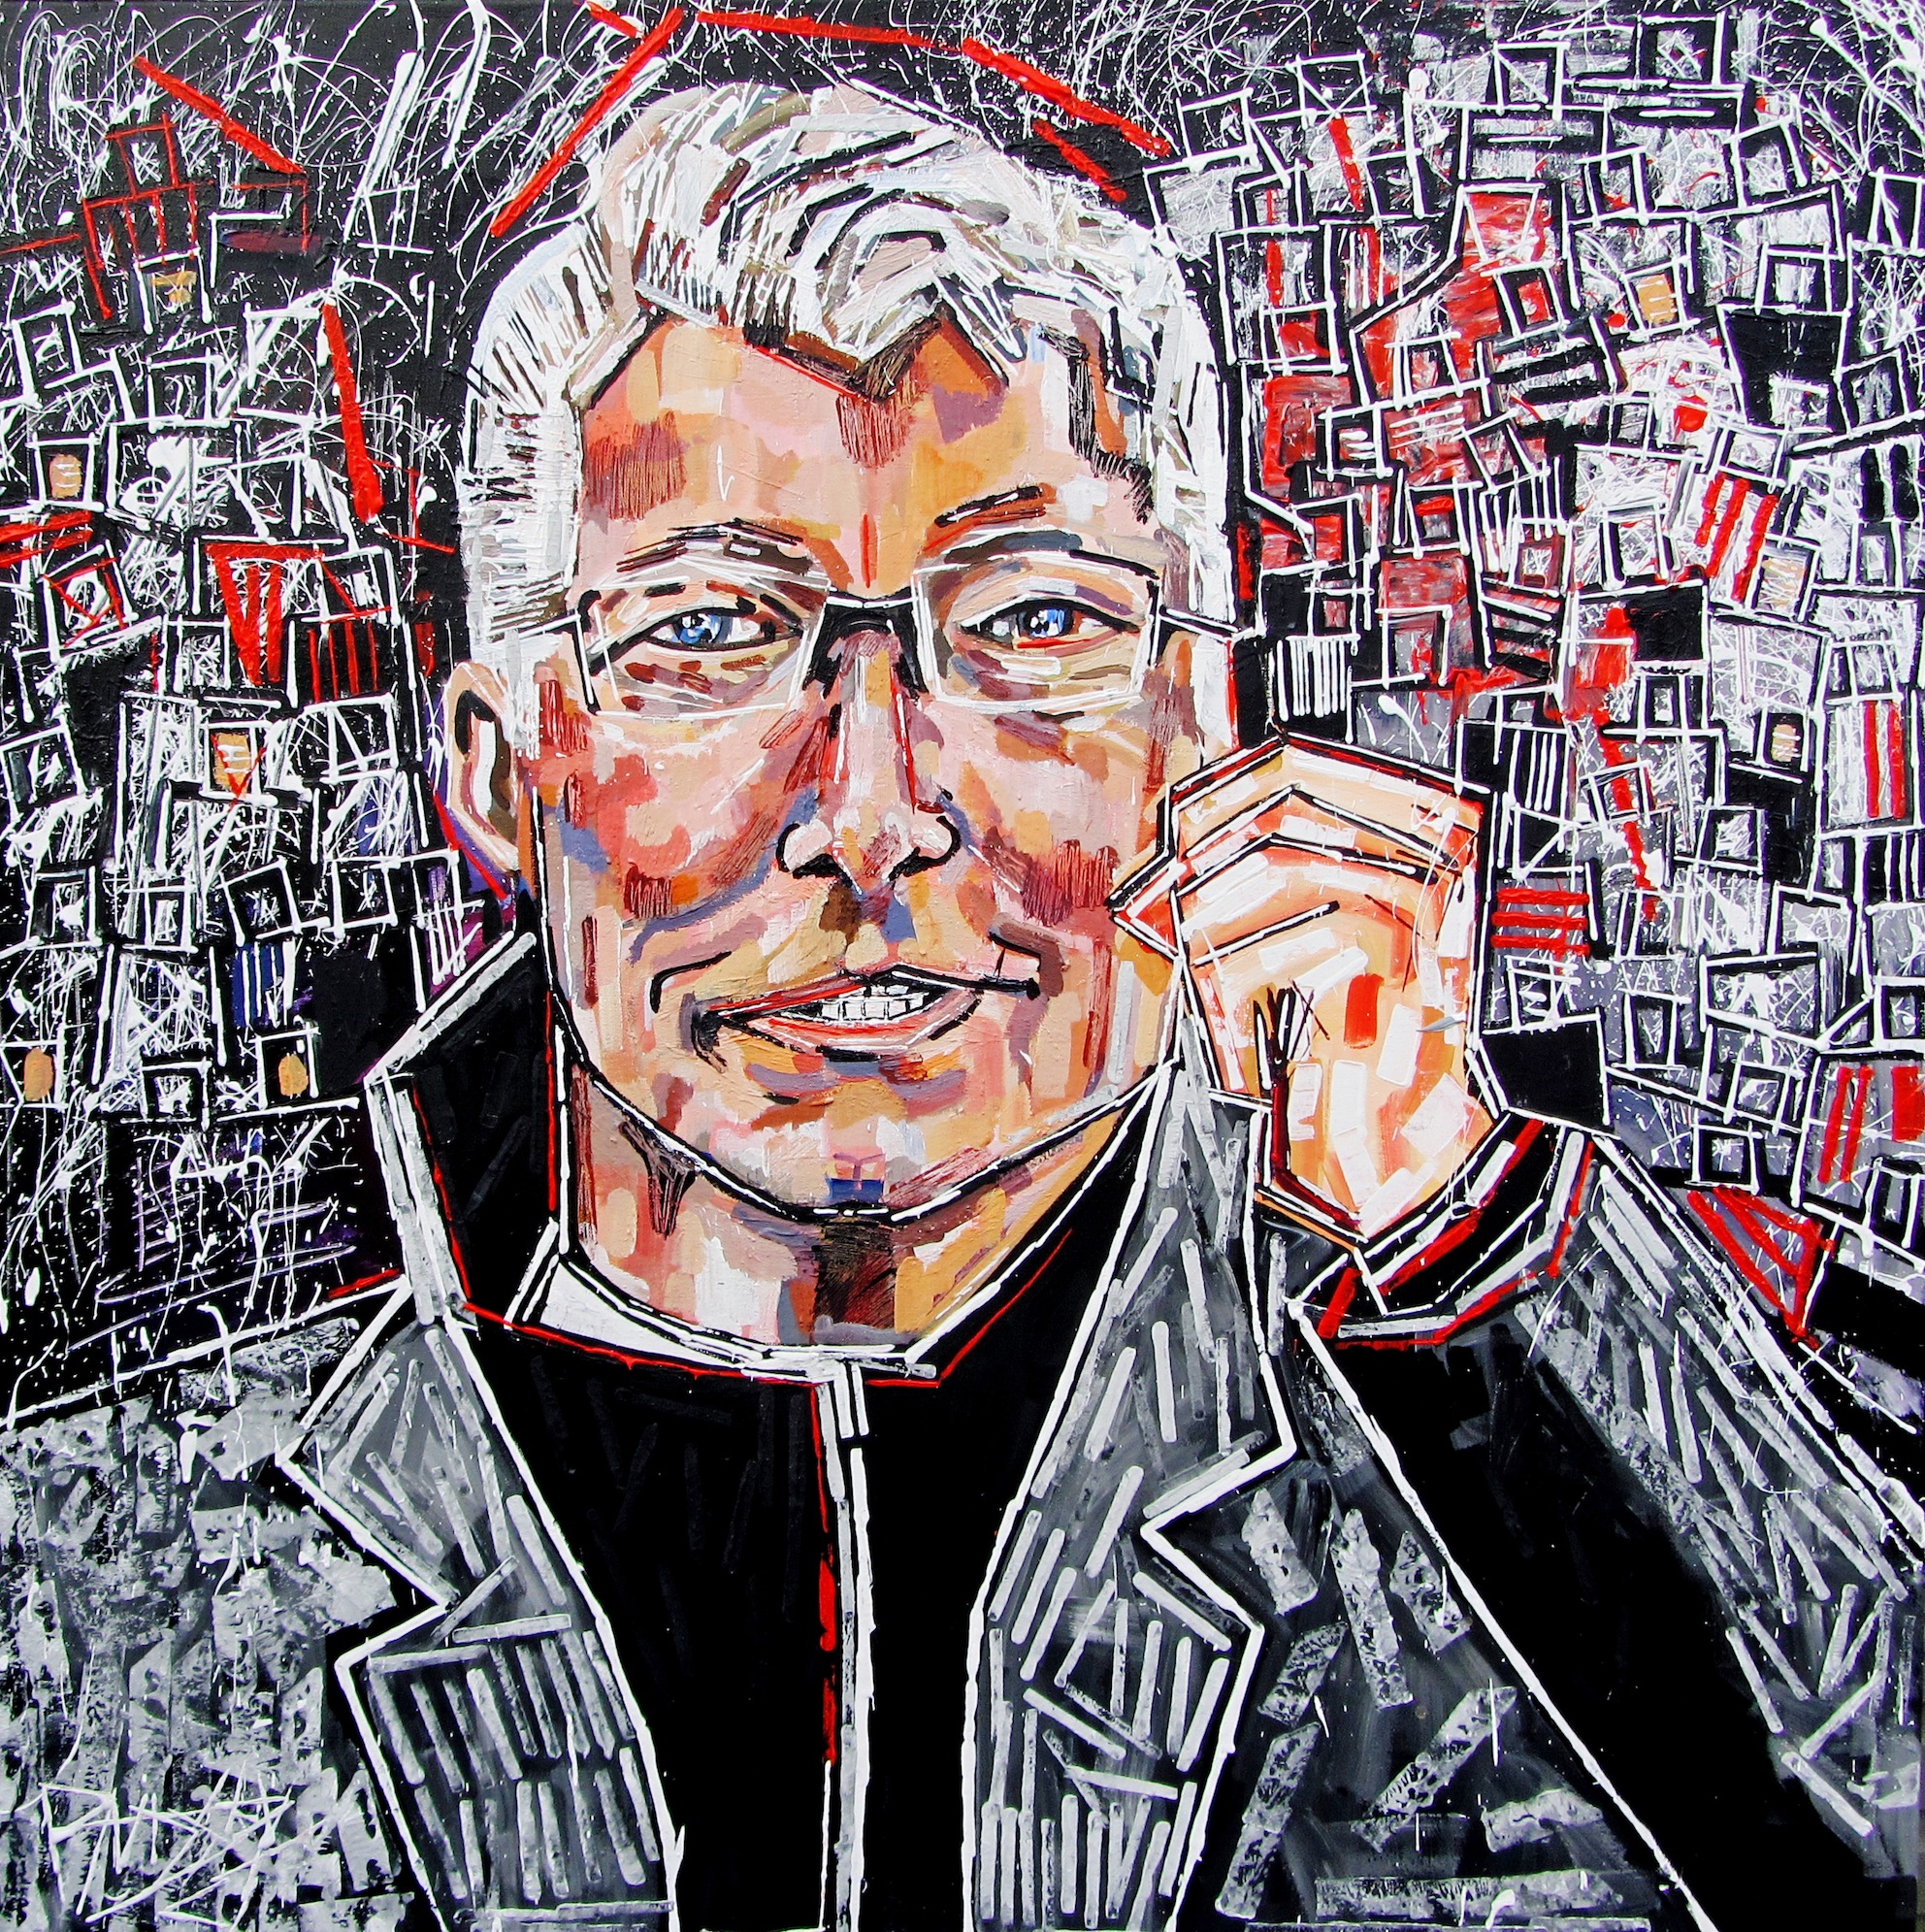 Sir Alex Ferguson Painting, Meet Sir Alex when he signs the painting - plus 2 VIP Full Hospitality